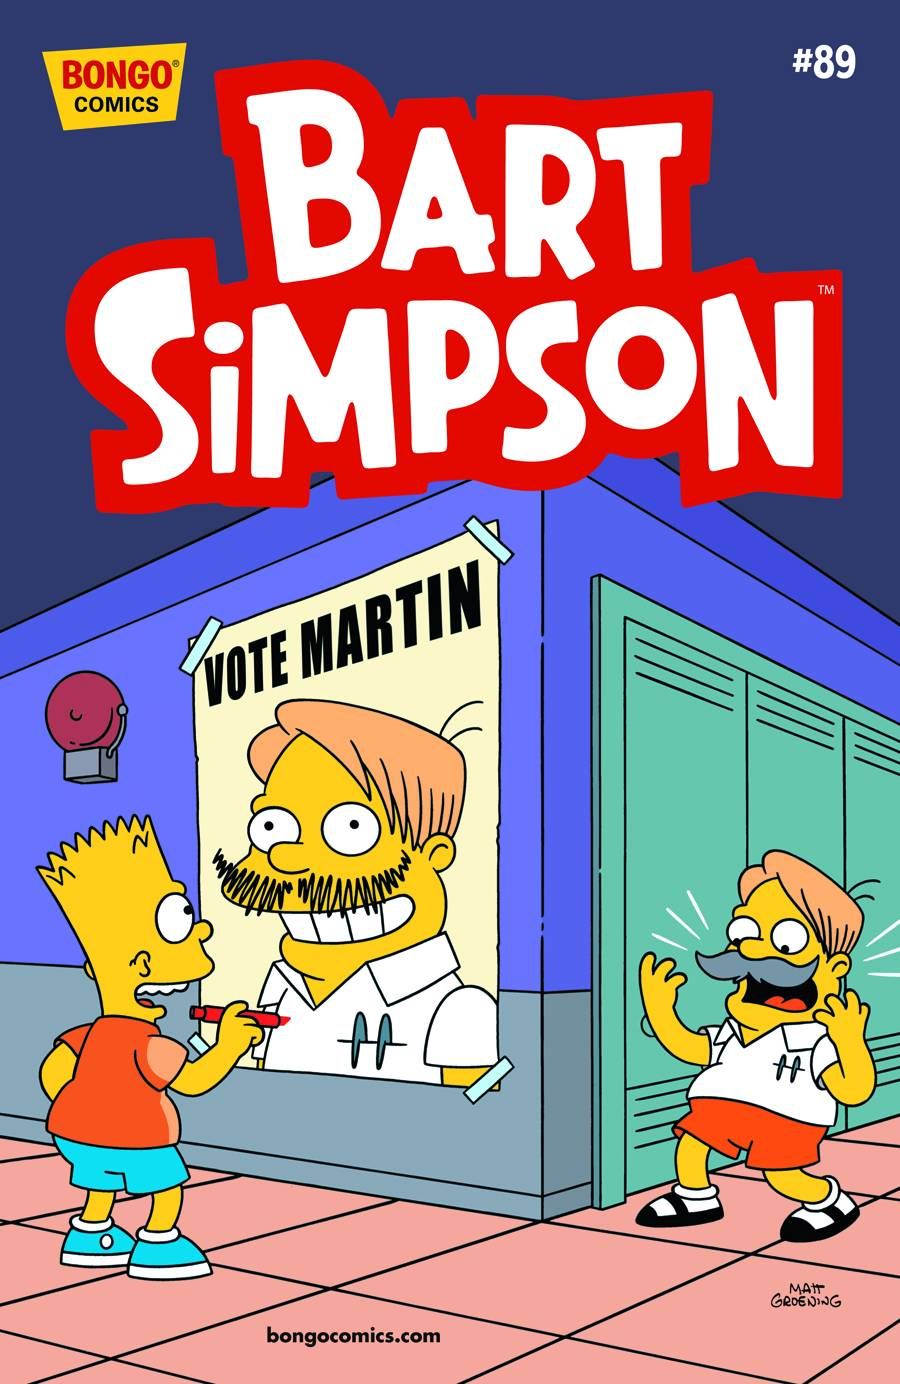 Simpsons Comics Presents Bart Simpson #89 Comic